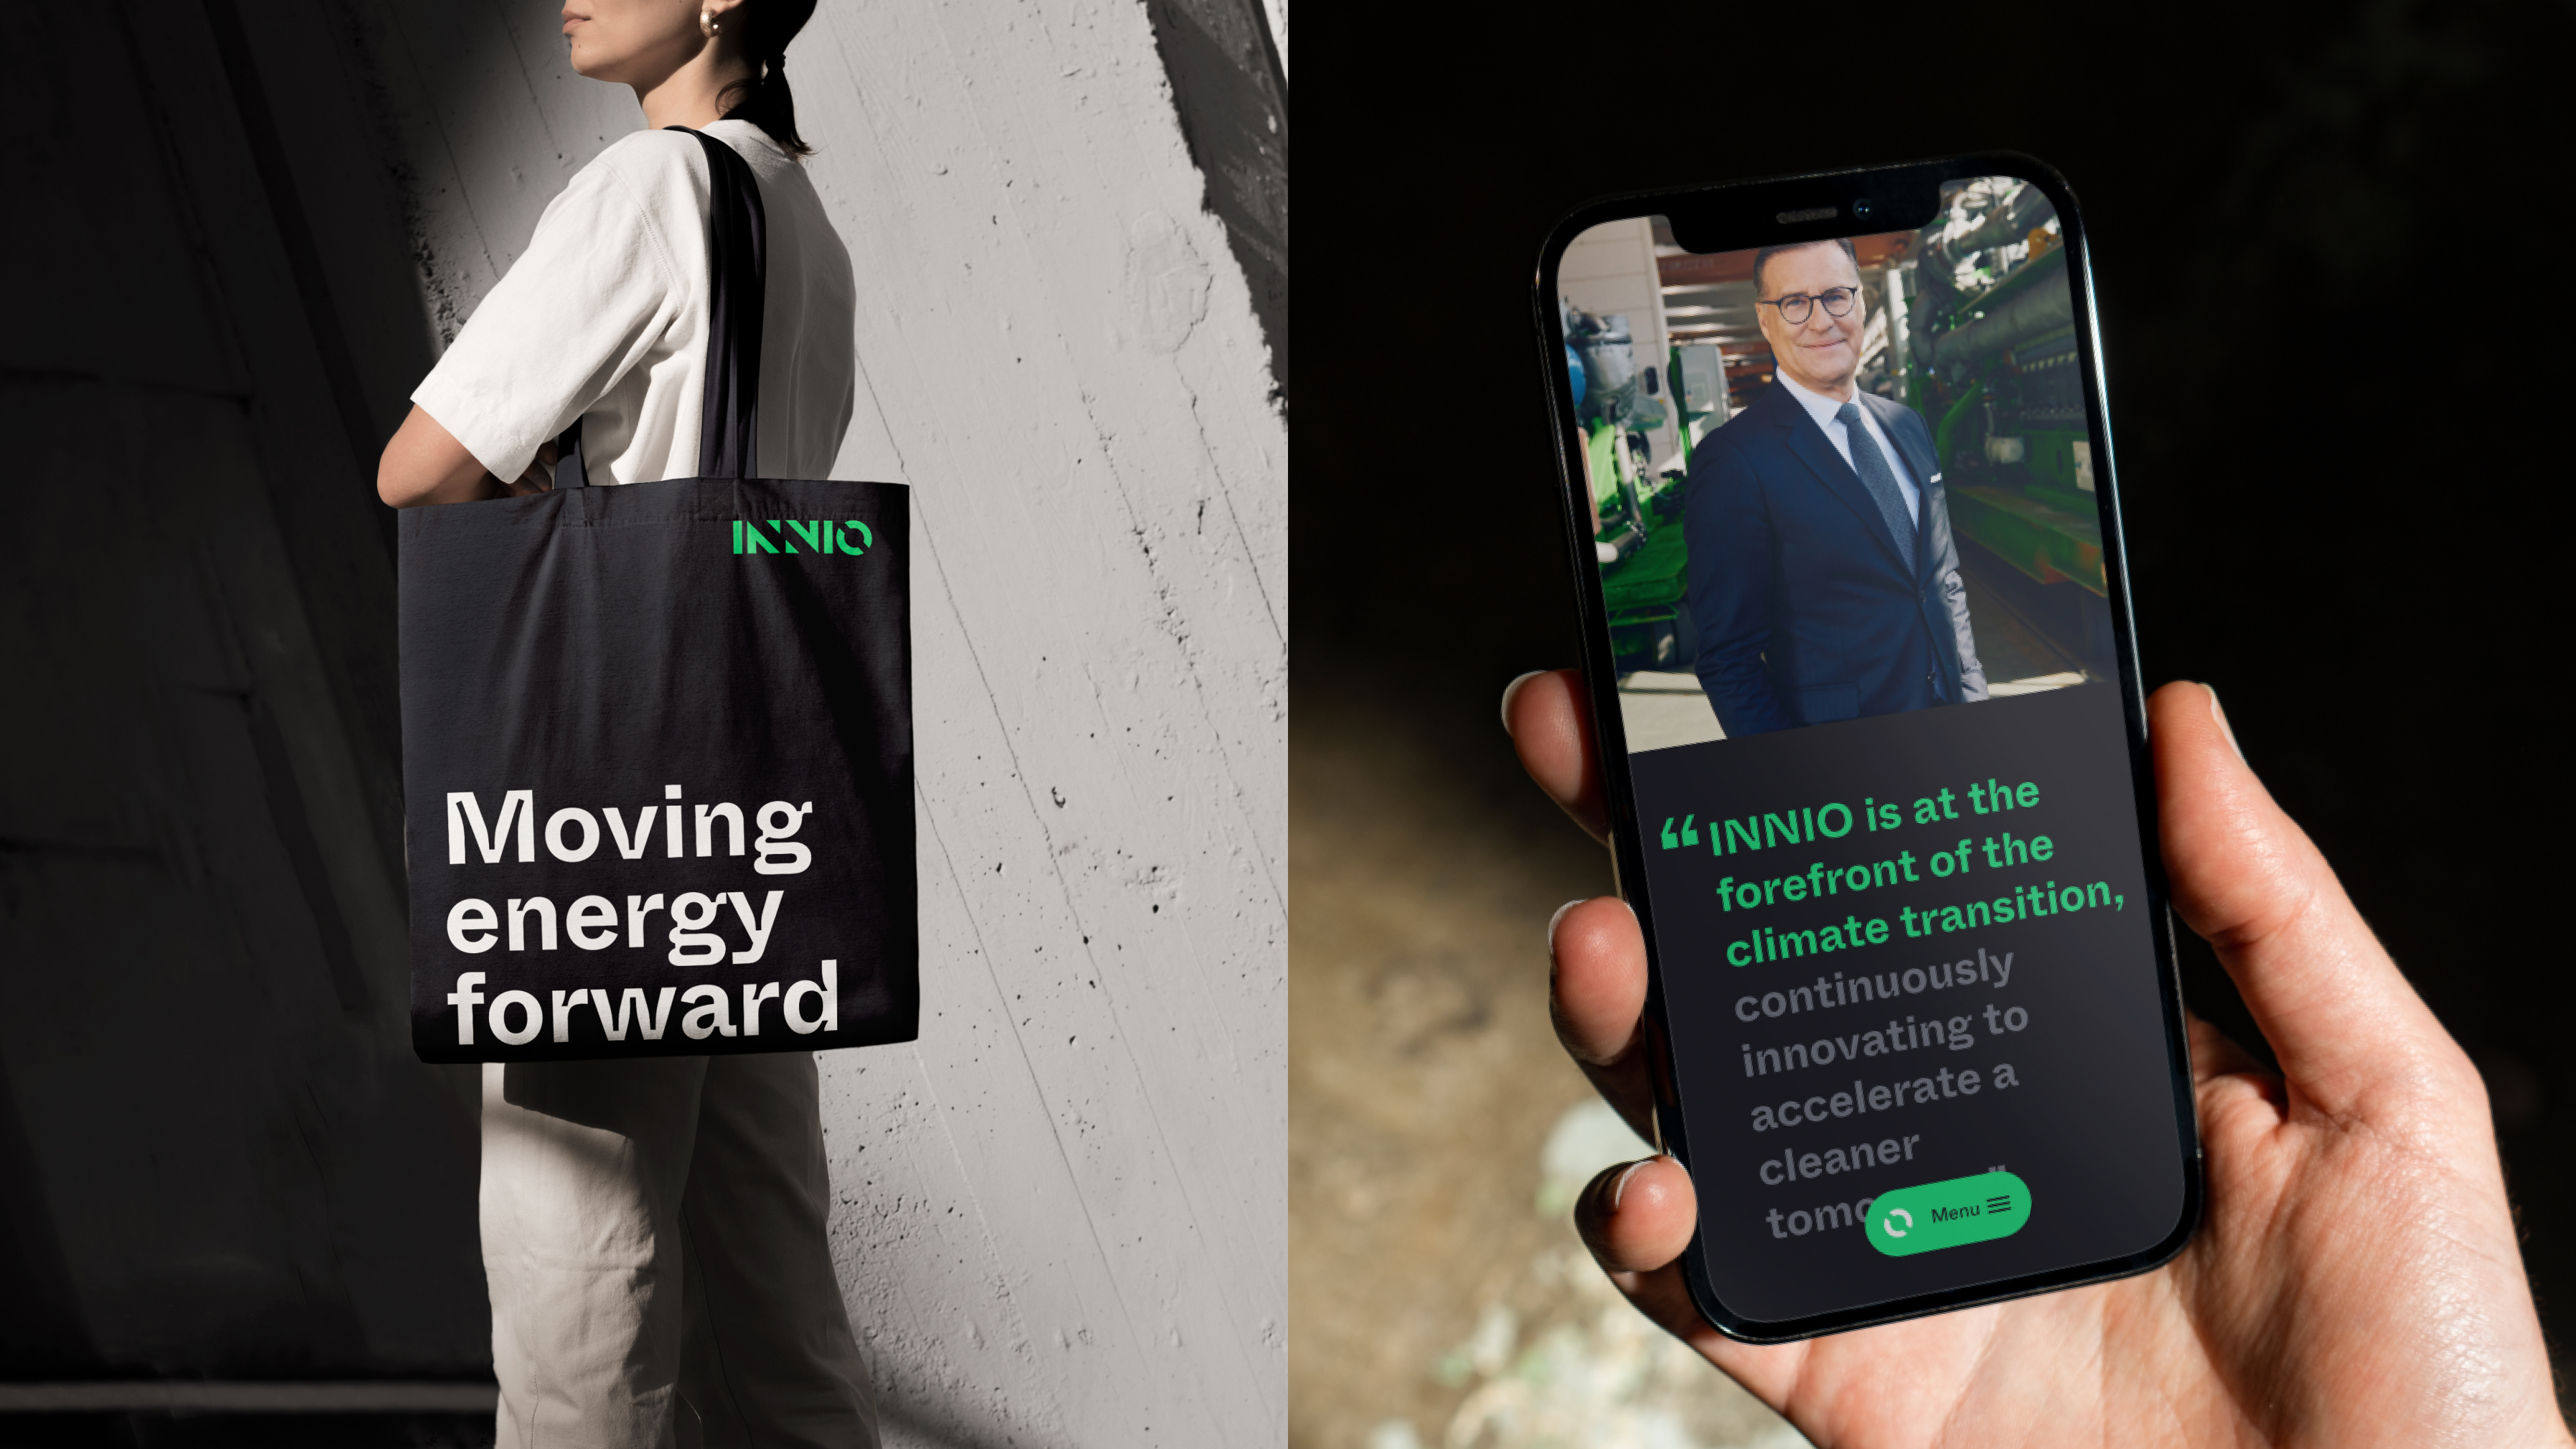 INNIO – Moving energy forward